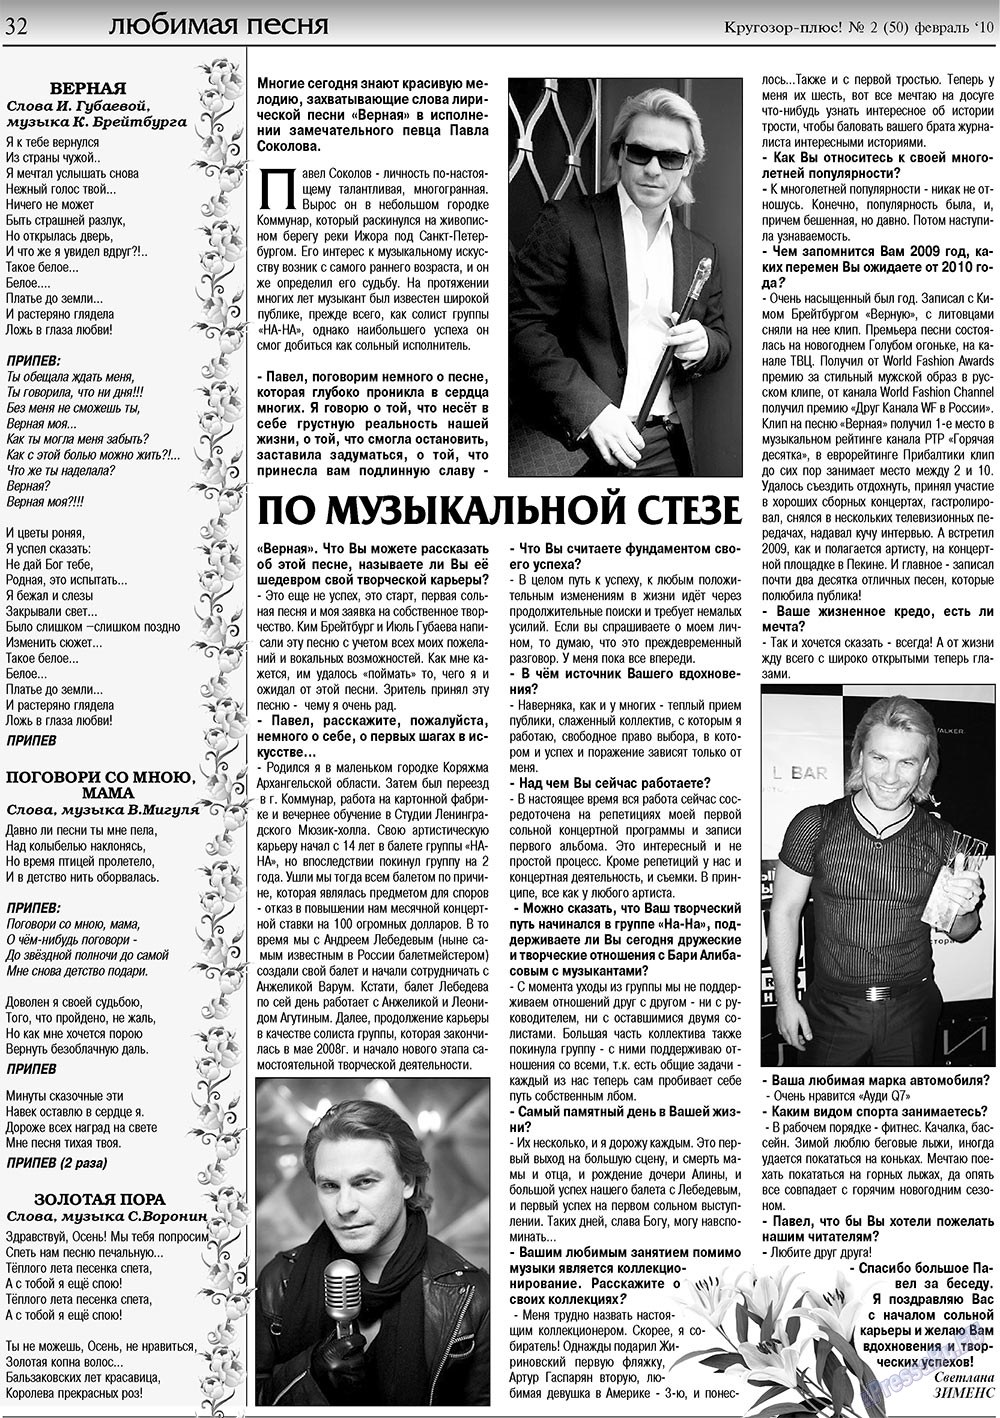 Кругозор плюс! (газета). 2010 год, номер 2, стр. 32